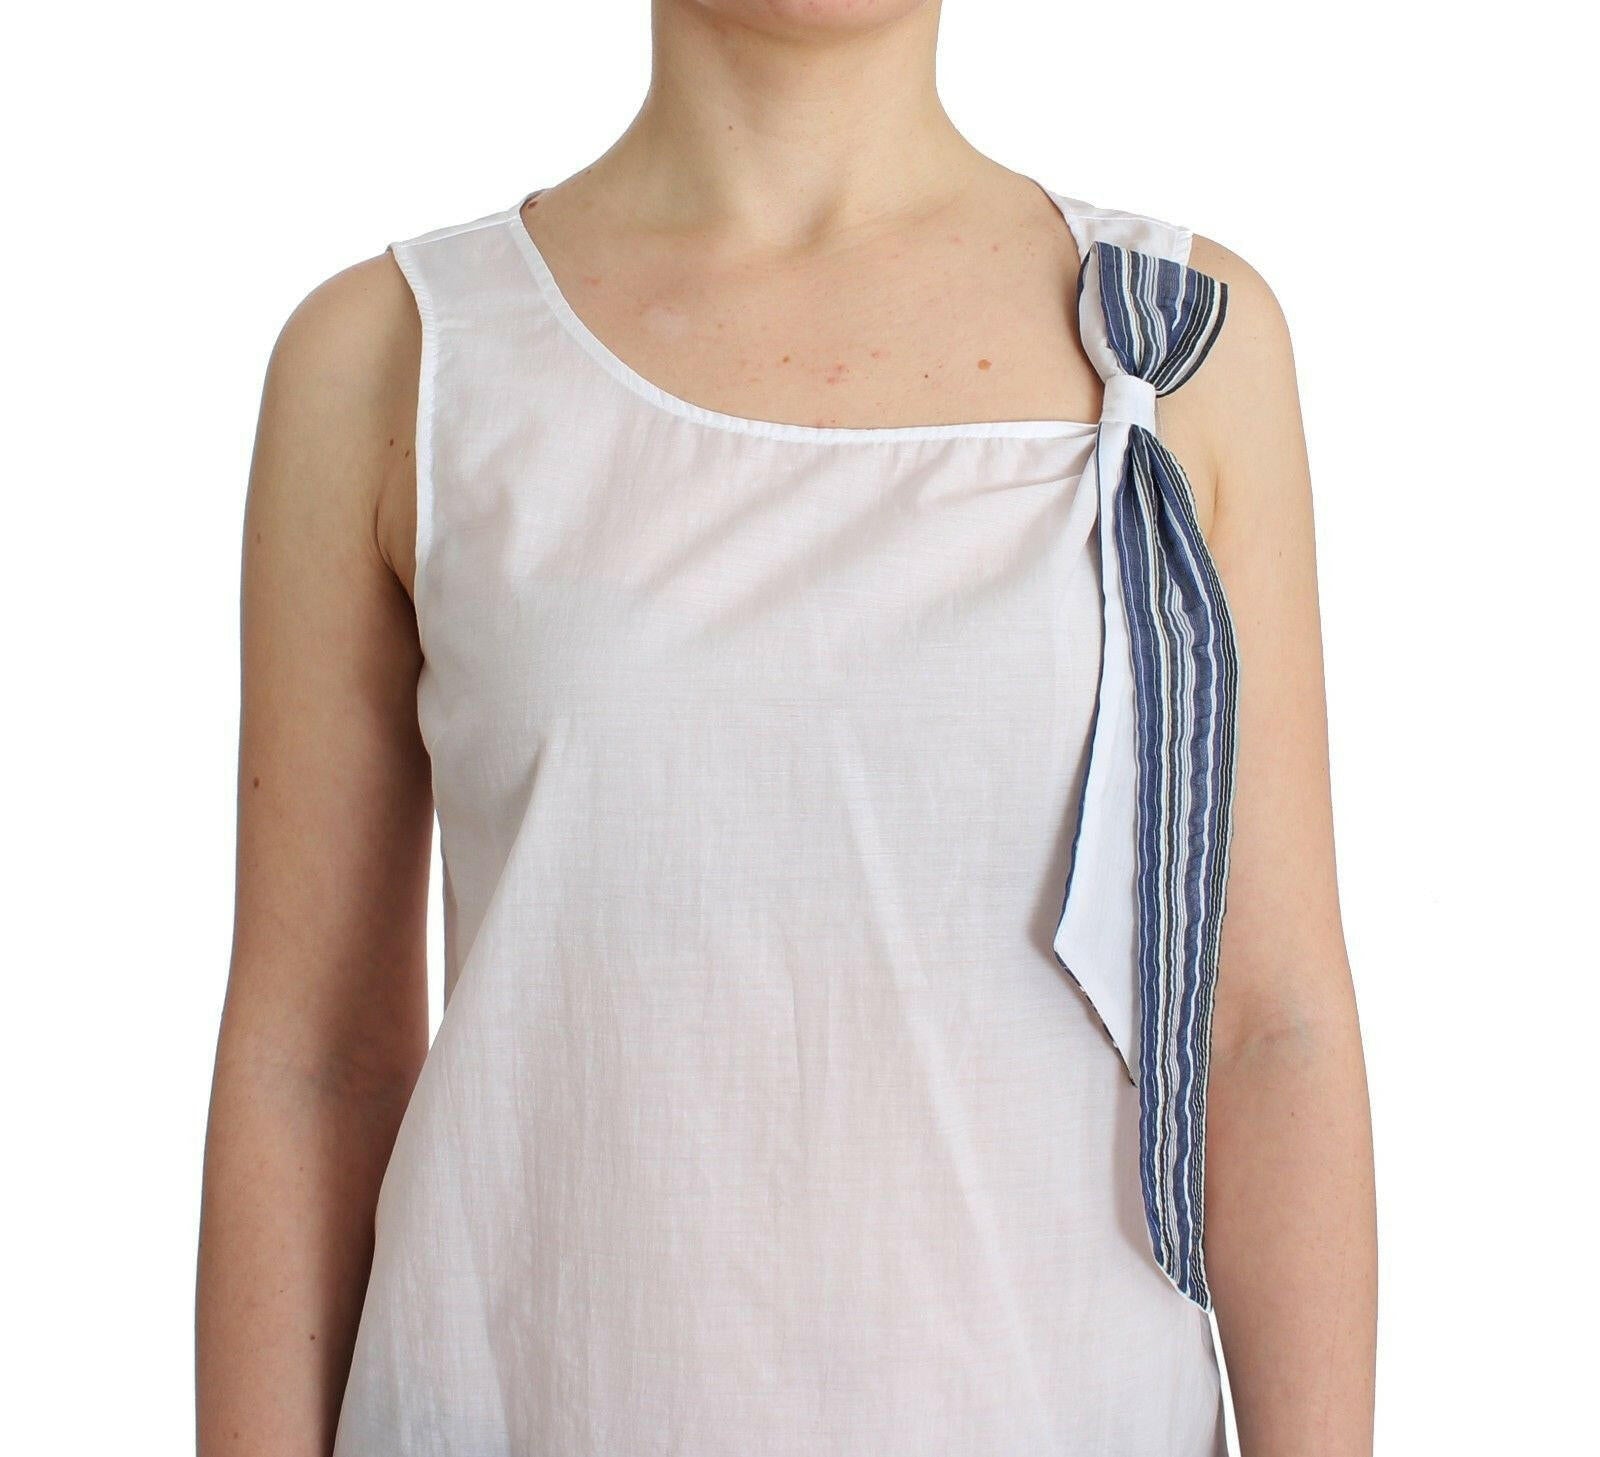 Ermanno Scervino White Blue Top Blouse Tank Shirt Sleeveless - GENUINE AUTHENTIC BRAND LLC  